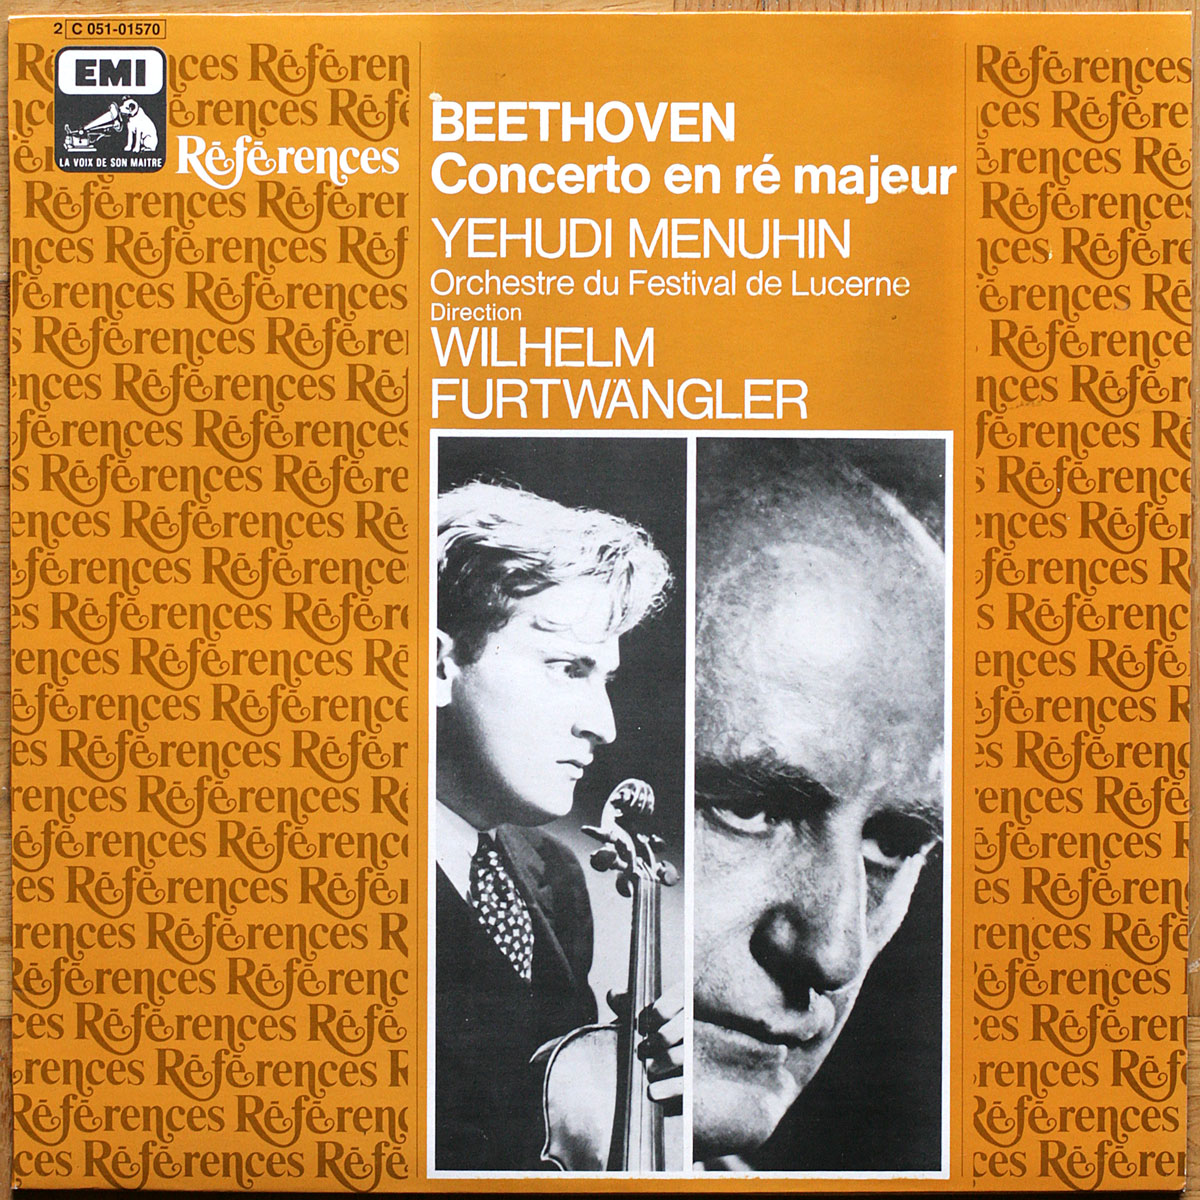 Beethoven • Concerto pour violon • Violinkonzert • Op. 61 • EMI 2C 051-01570 • Yehudi Menuhin • Orchestre Du Festival De Lucerne • Wilhelm Furtwängler